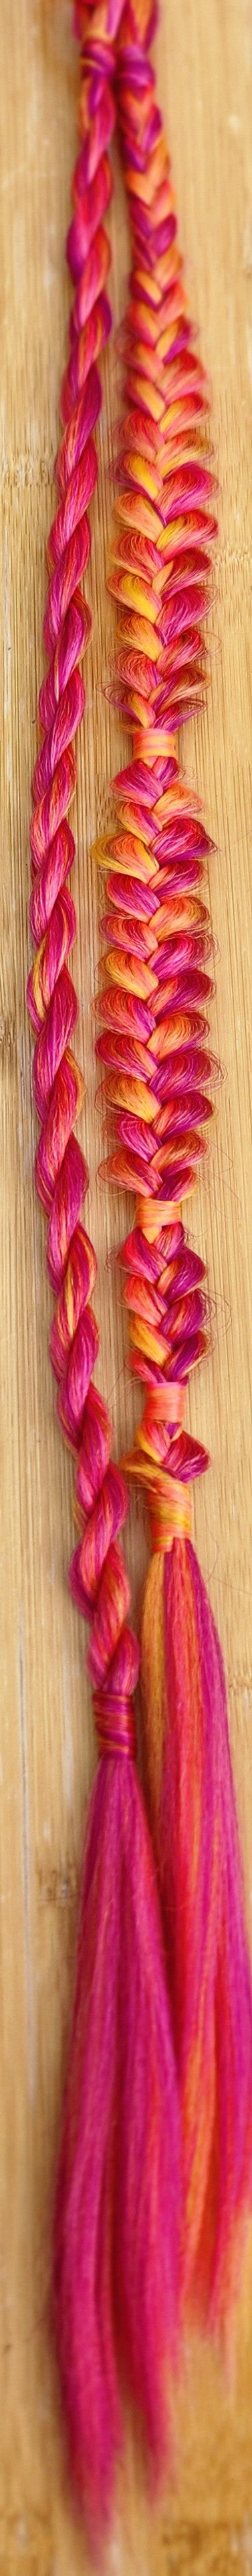 Pink and Yellow Single Braid and Twist on Nylon Hairband